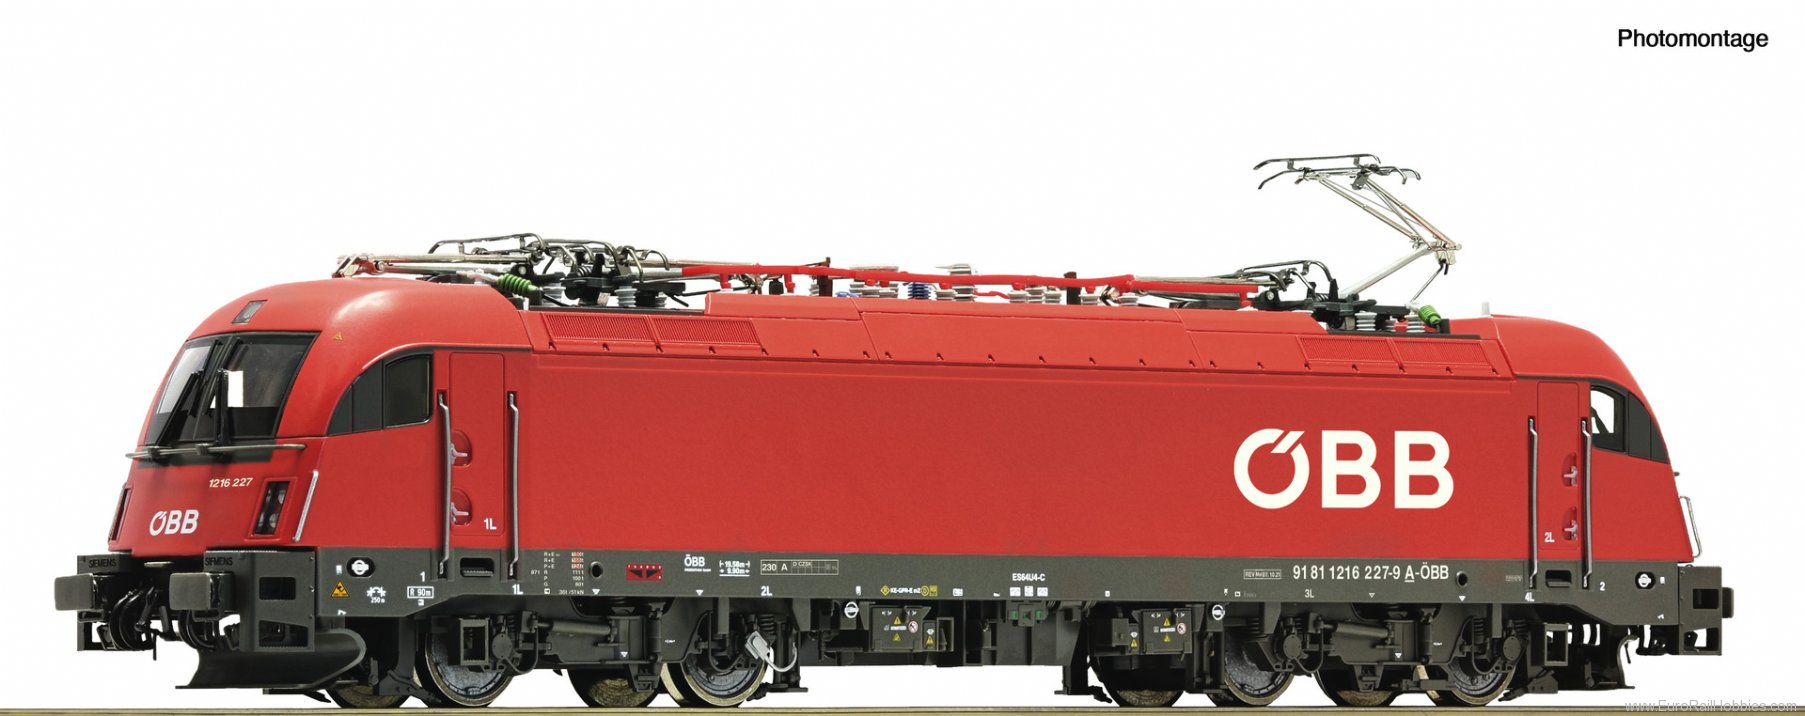 Roco 7520032 Electric locomotive 1216 227-9, ÃBB (DCC S